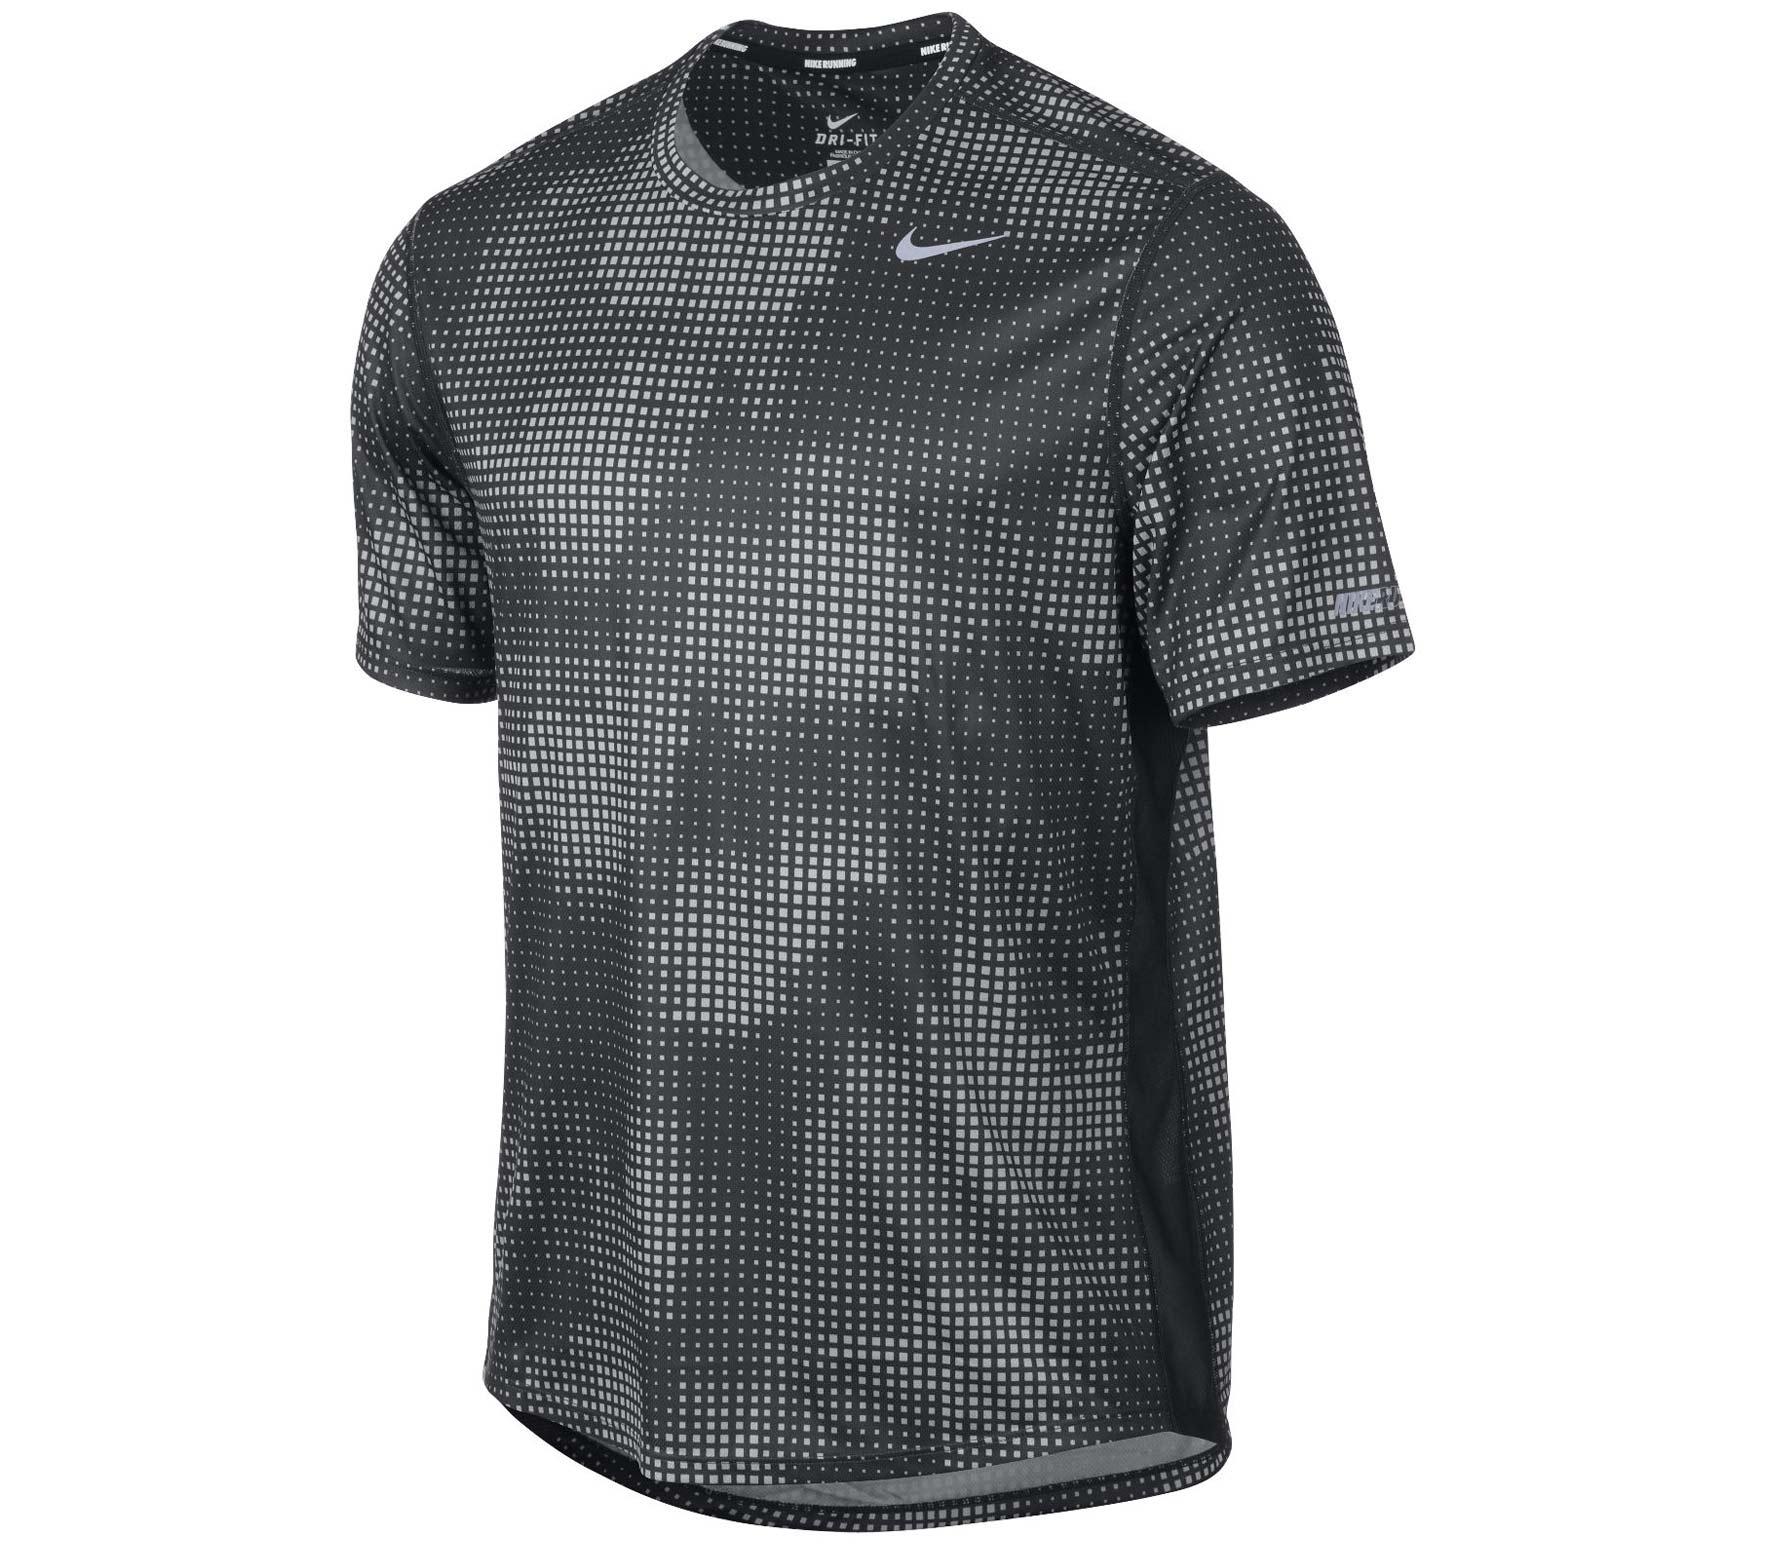 Foto Nike - Camiseta Hombre Sublimated - SP13 foto 941693